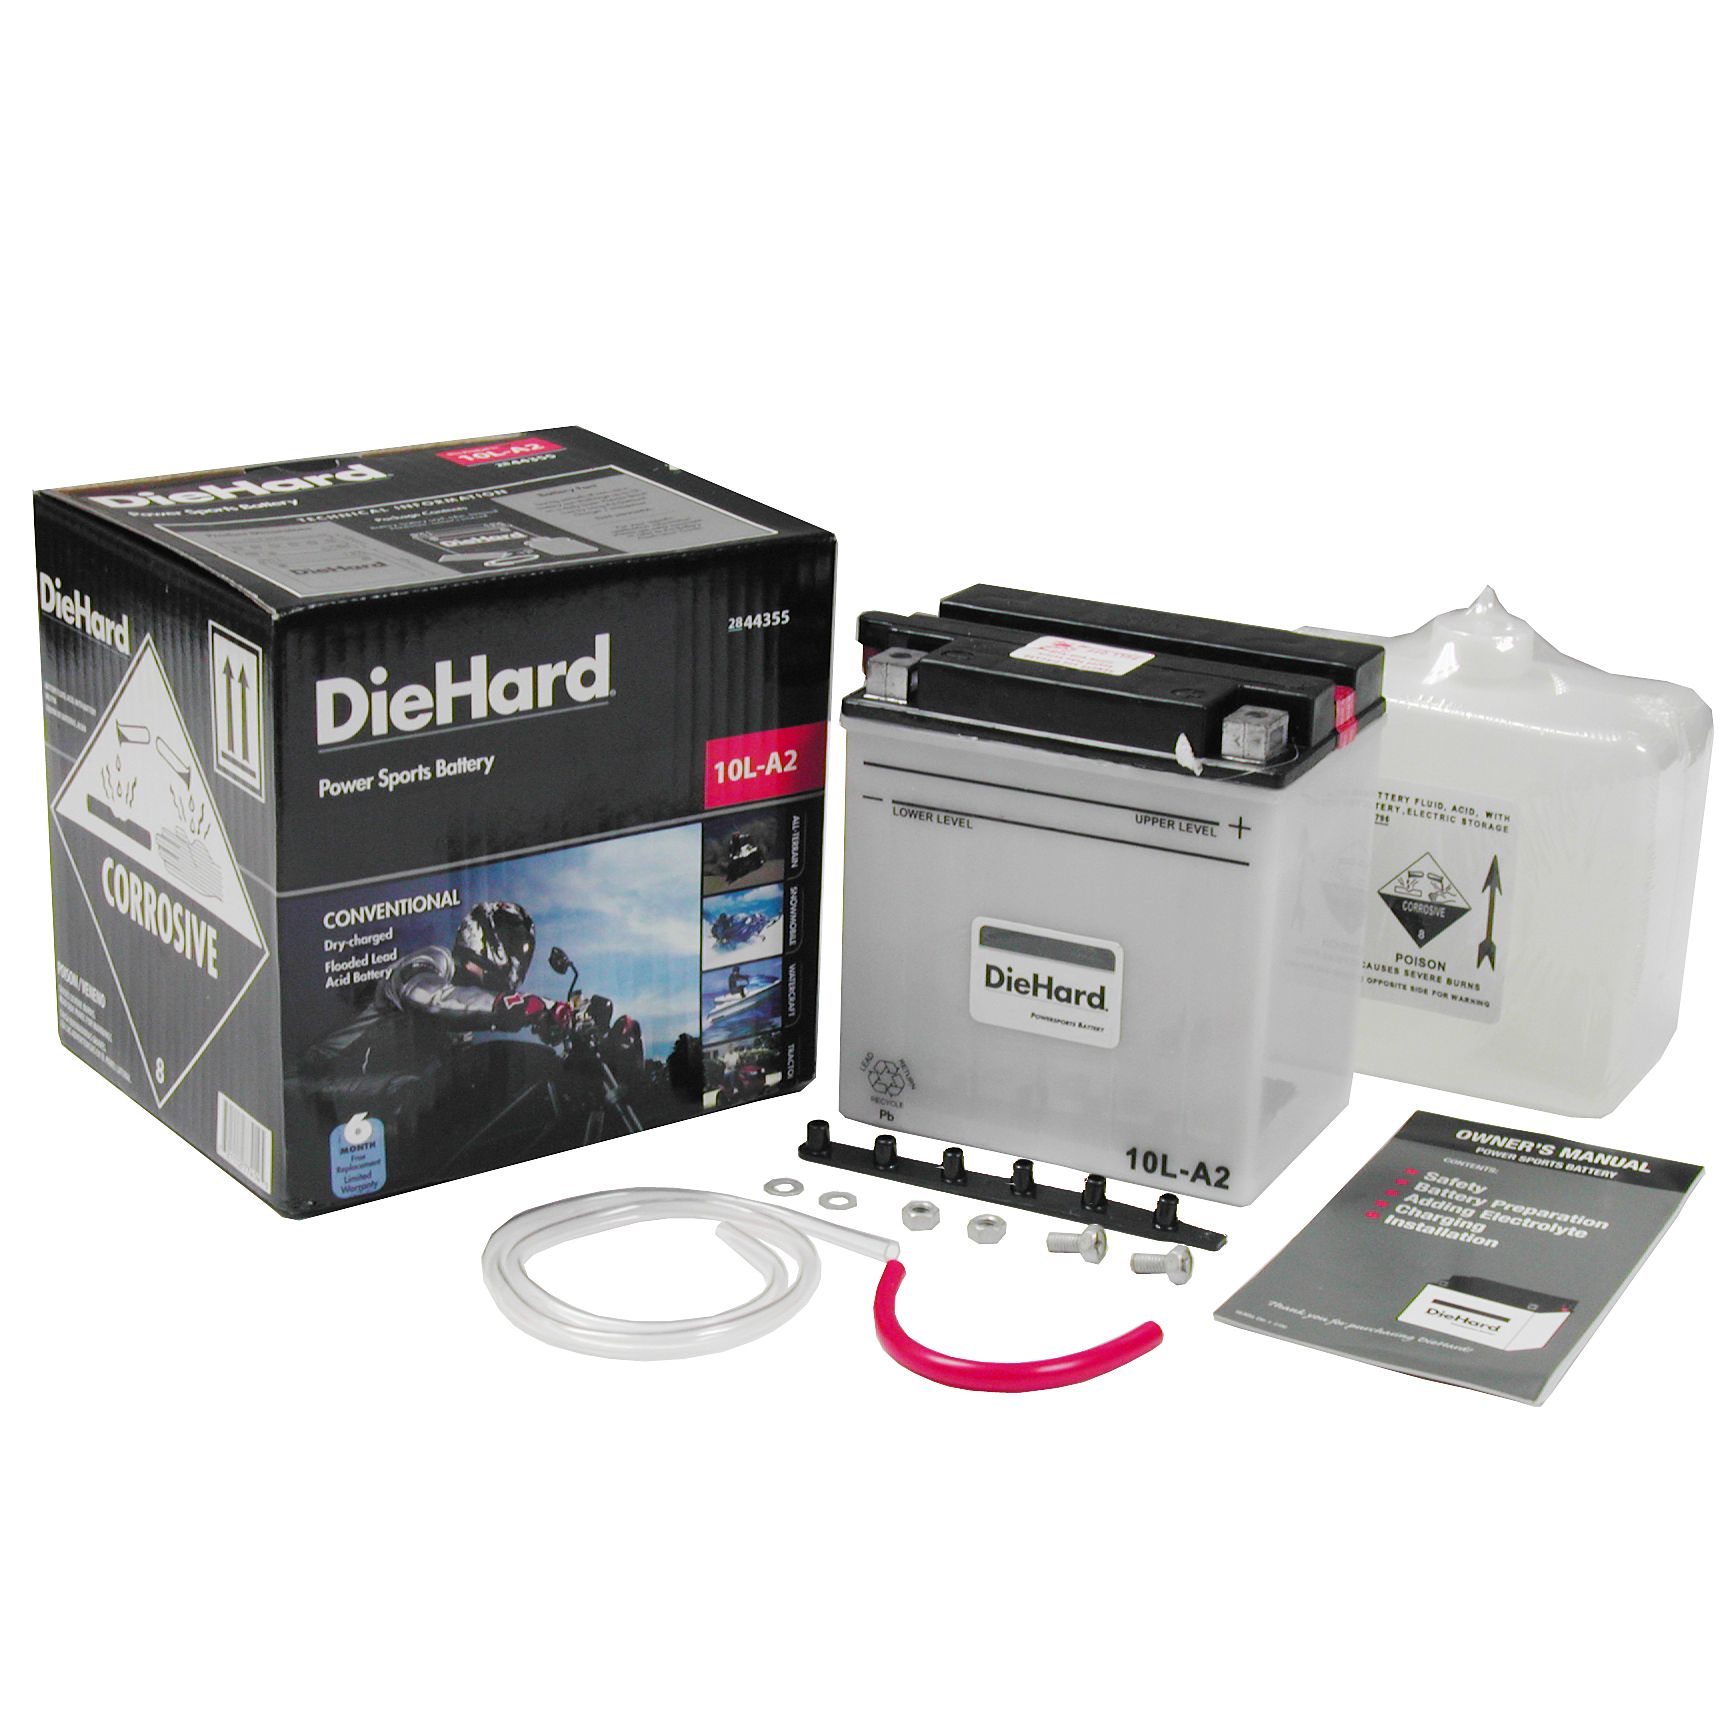 DieHard PowerSport Battery 10L-A2